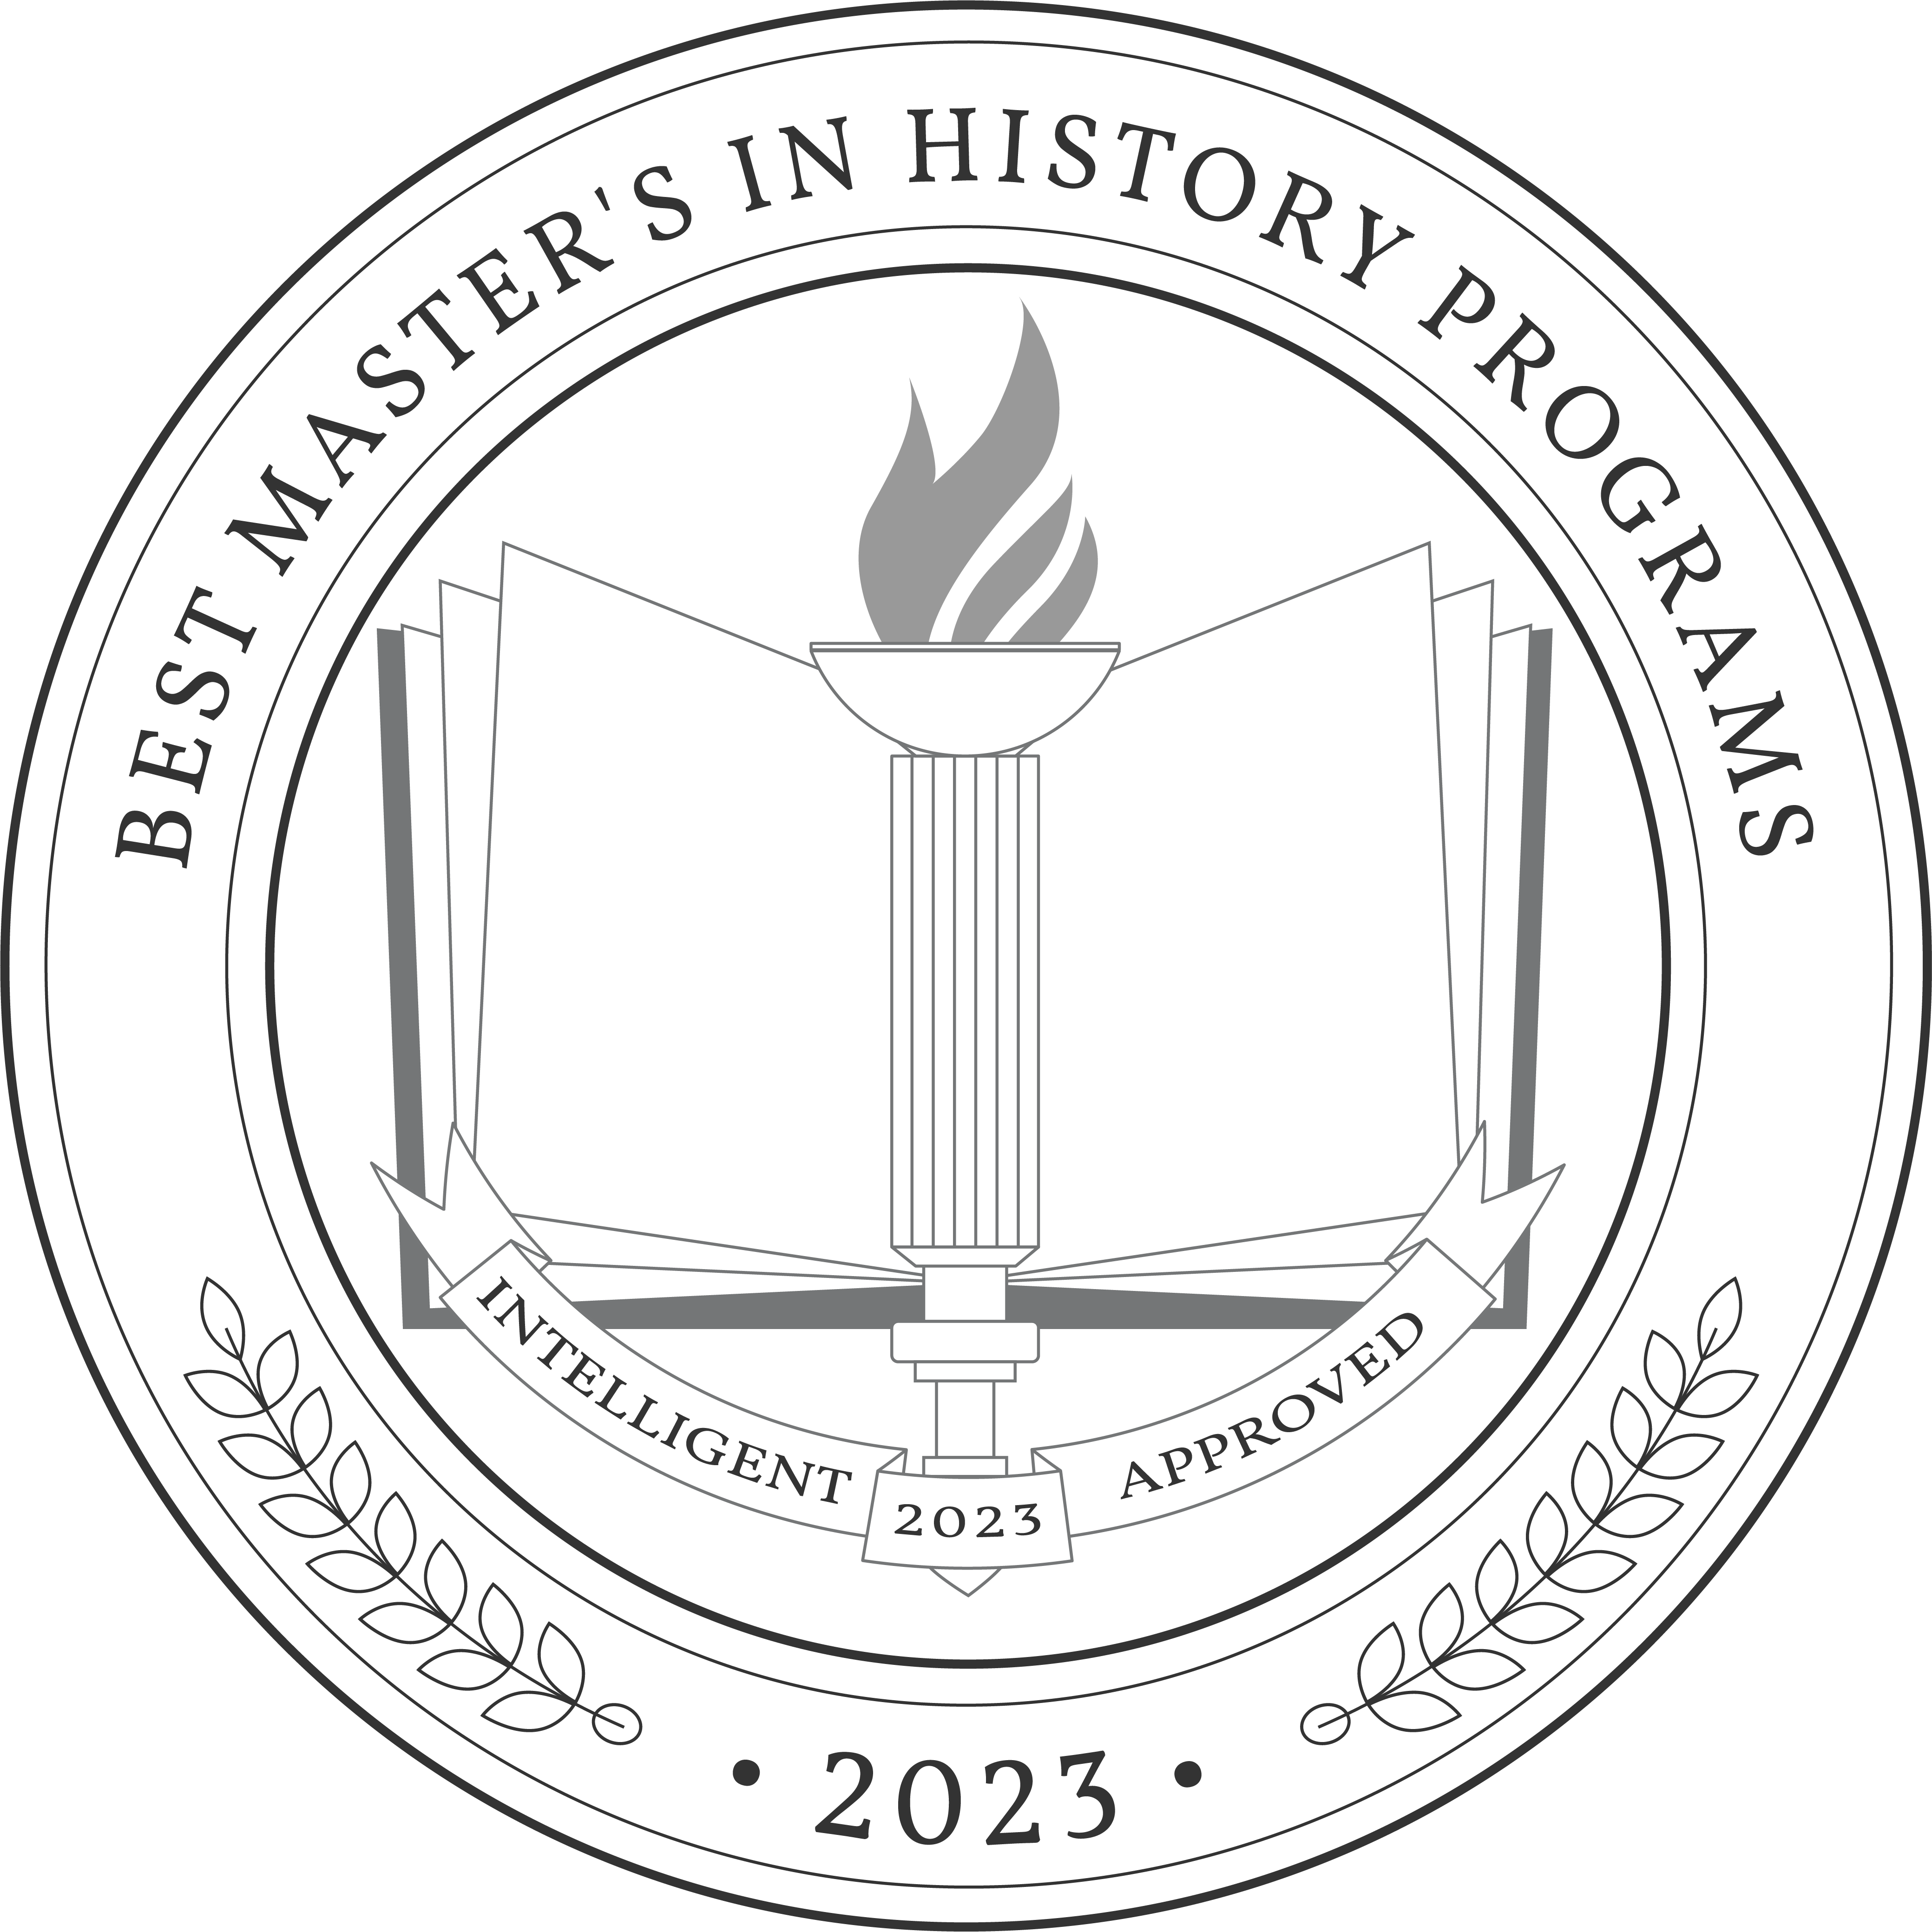 Best Master's in History Programs 2023